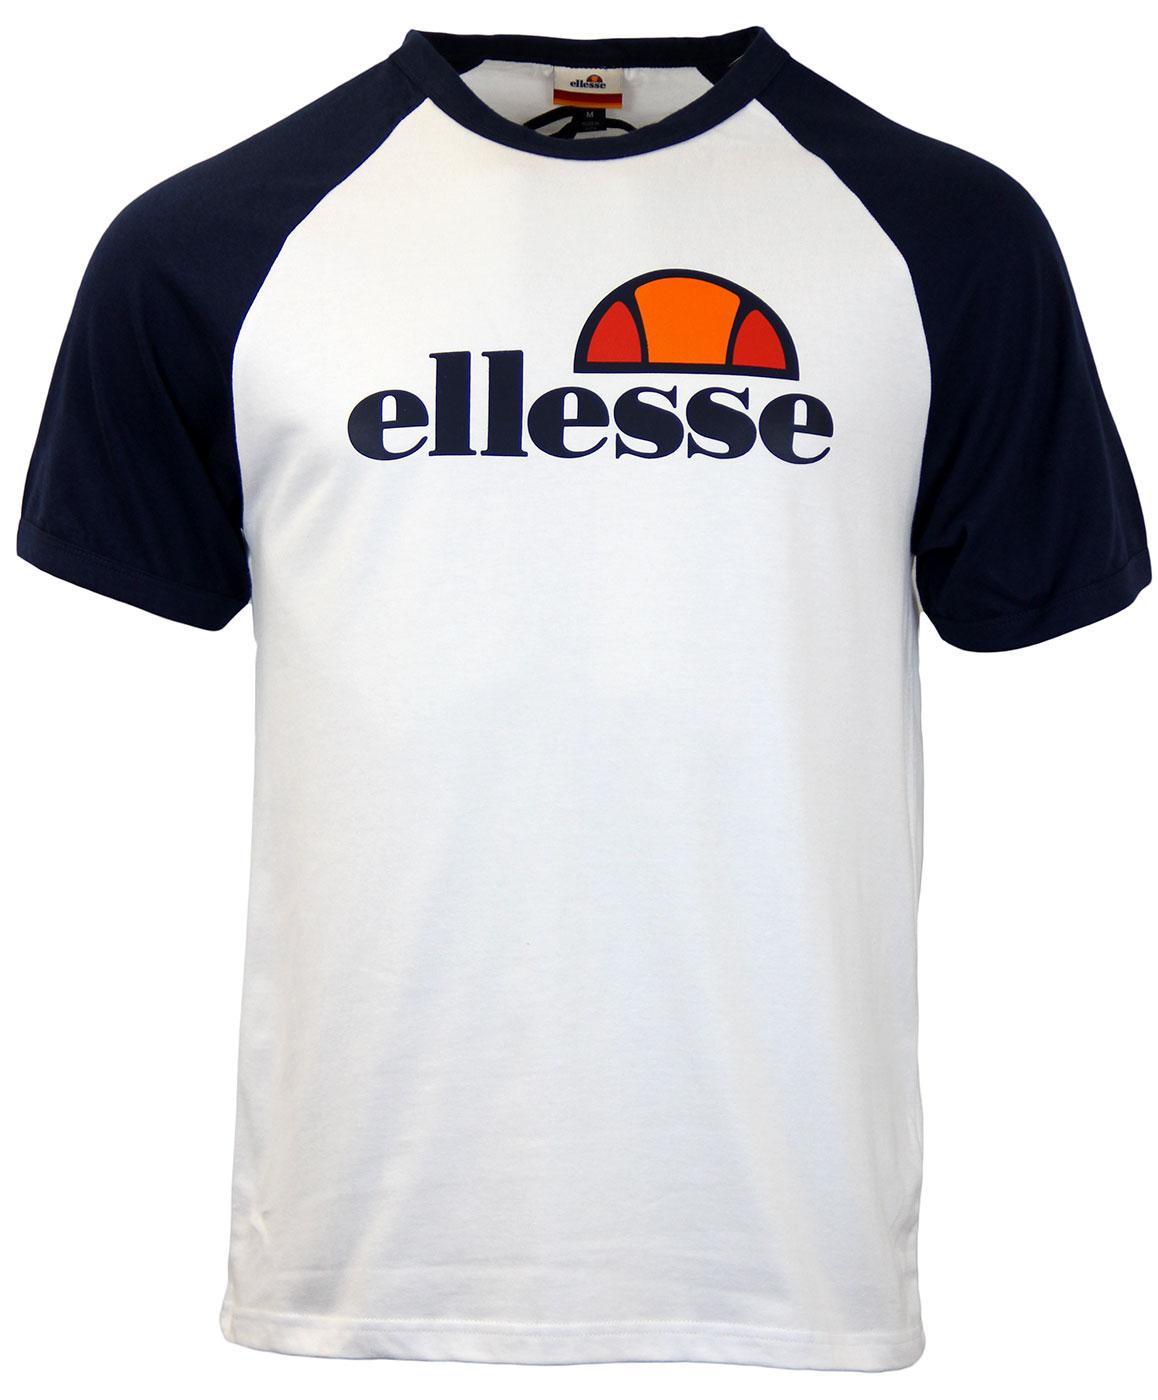 Cassina ELLESSE Retro 1980s Raglan Logo T-shirt WN